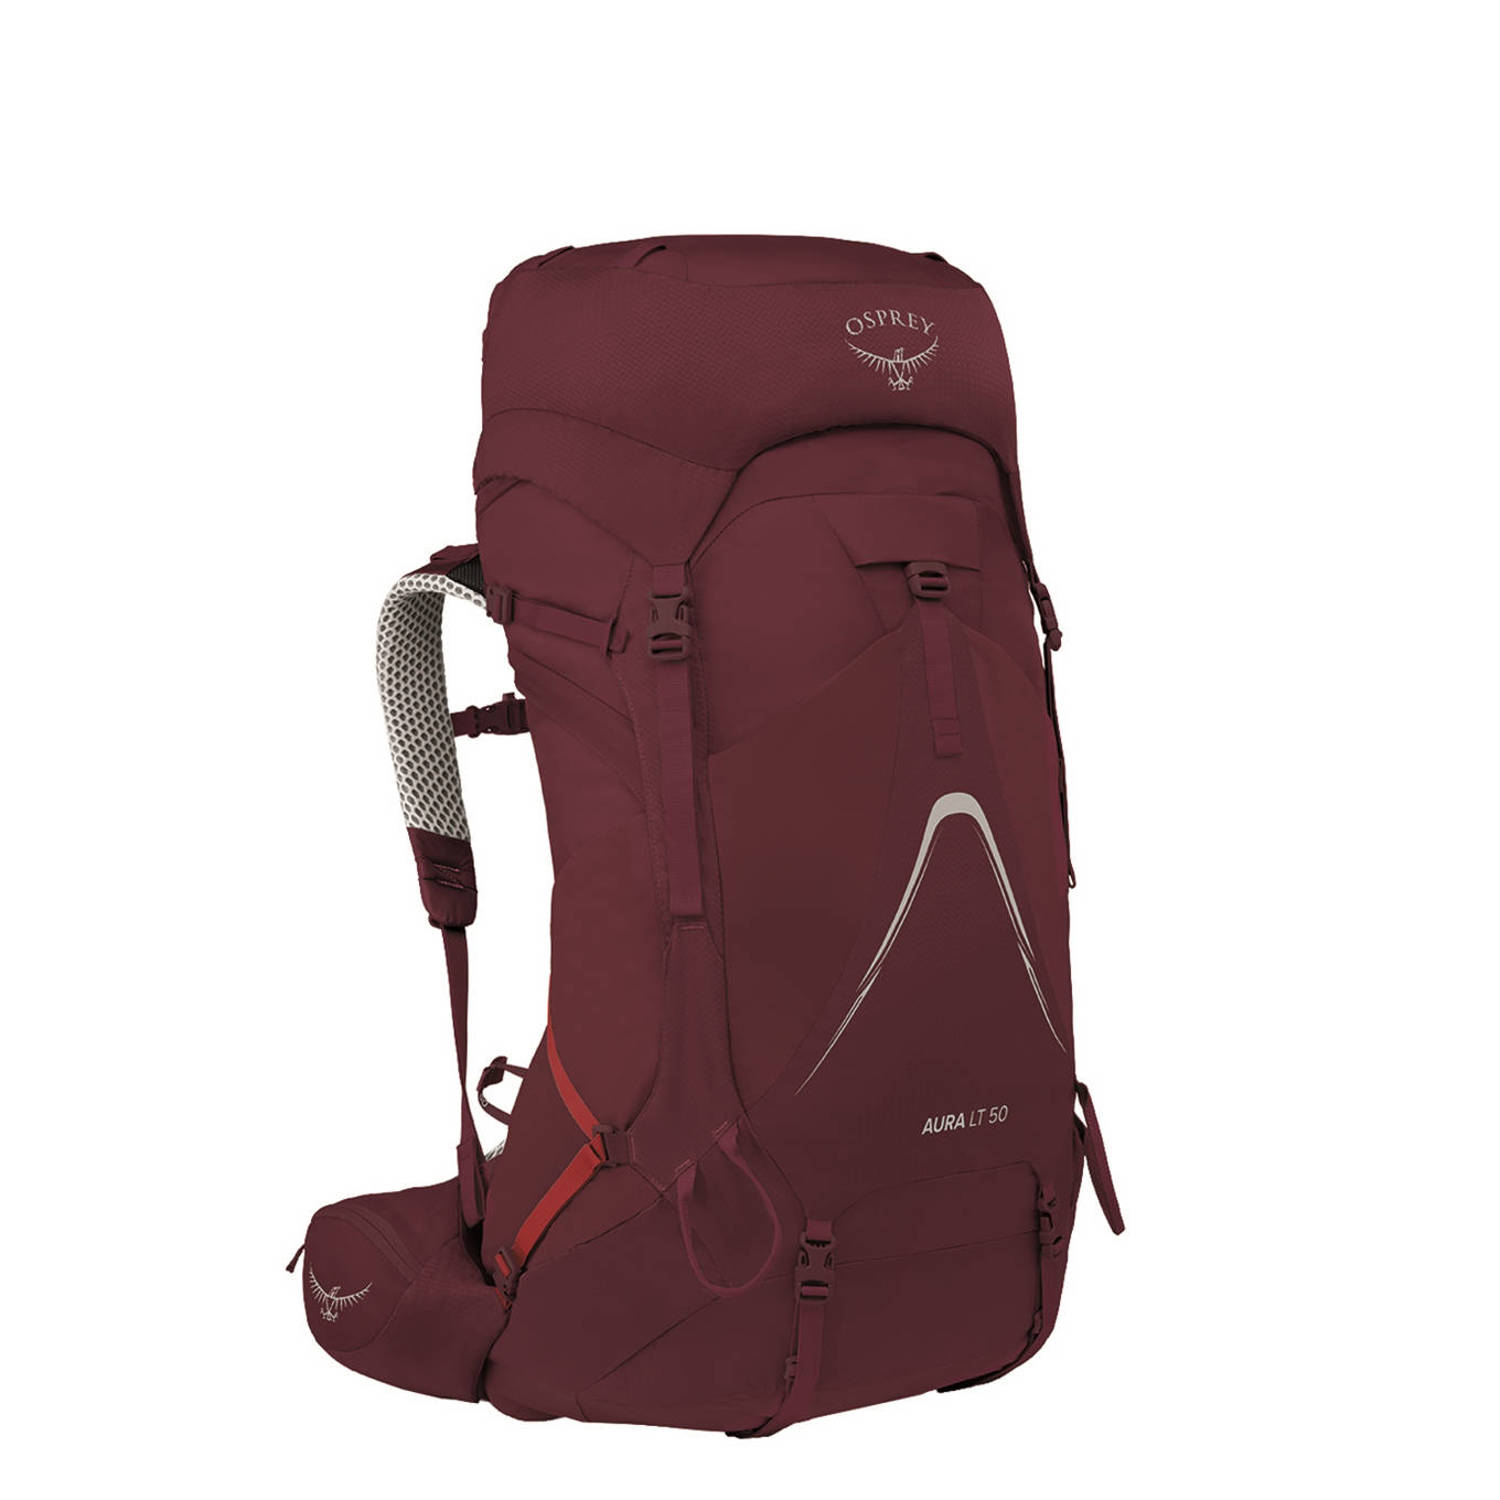 Osprey backpack Aura AG LT 50L WM L bordeauxrood